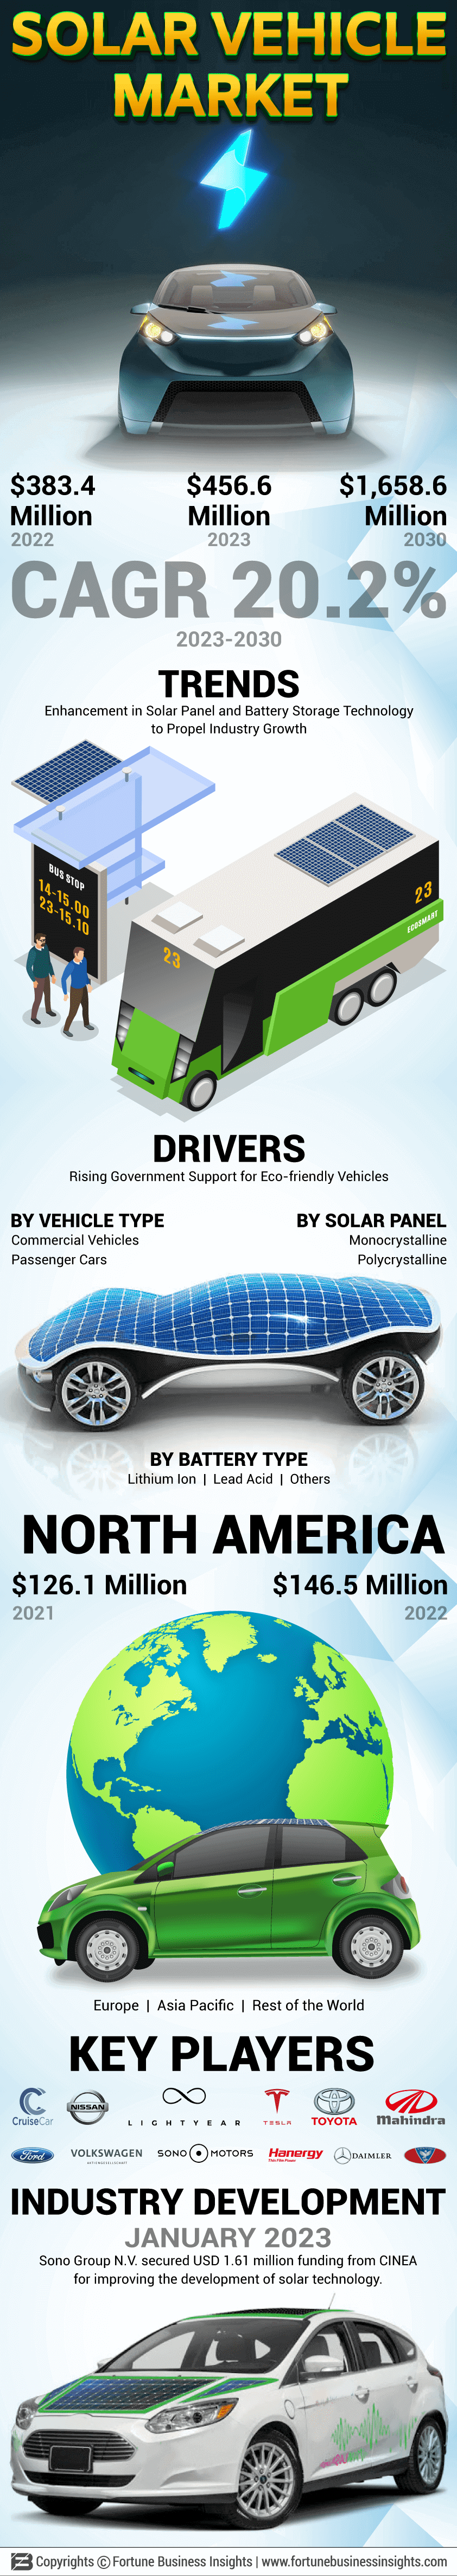 Solar Vehicle Market 